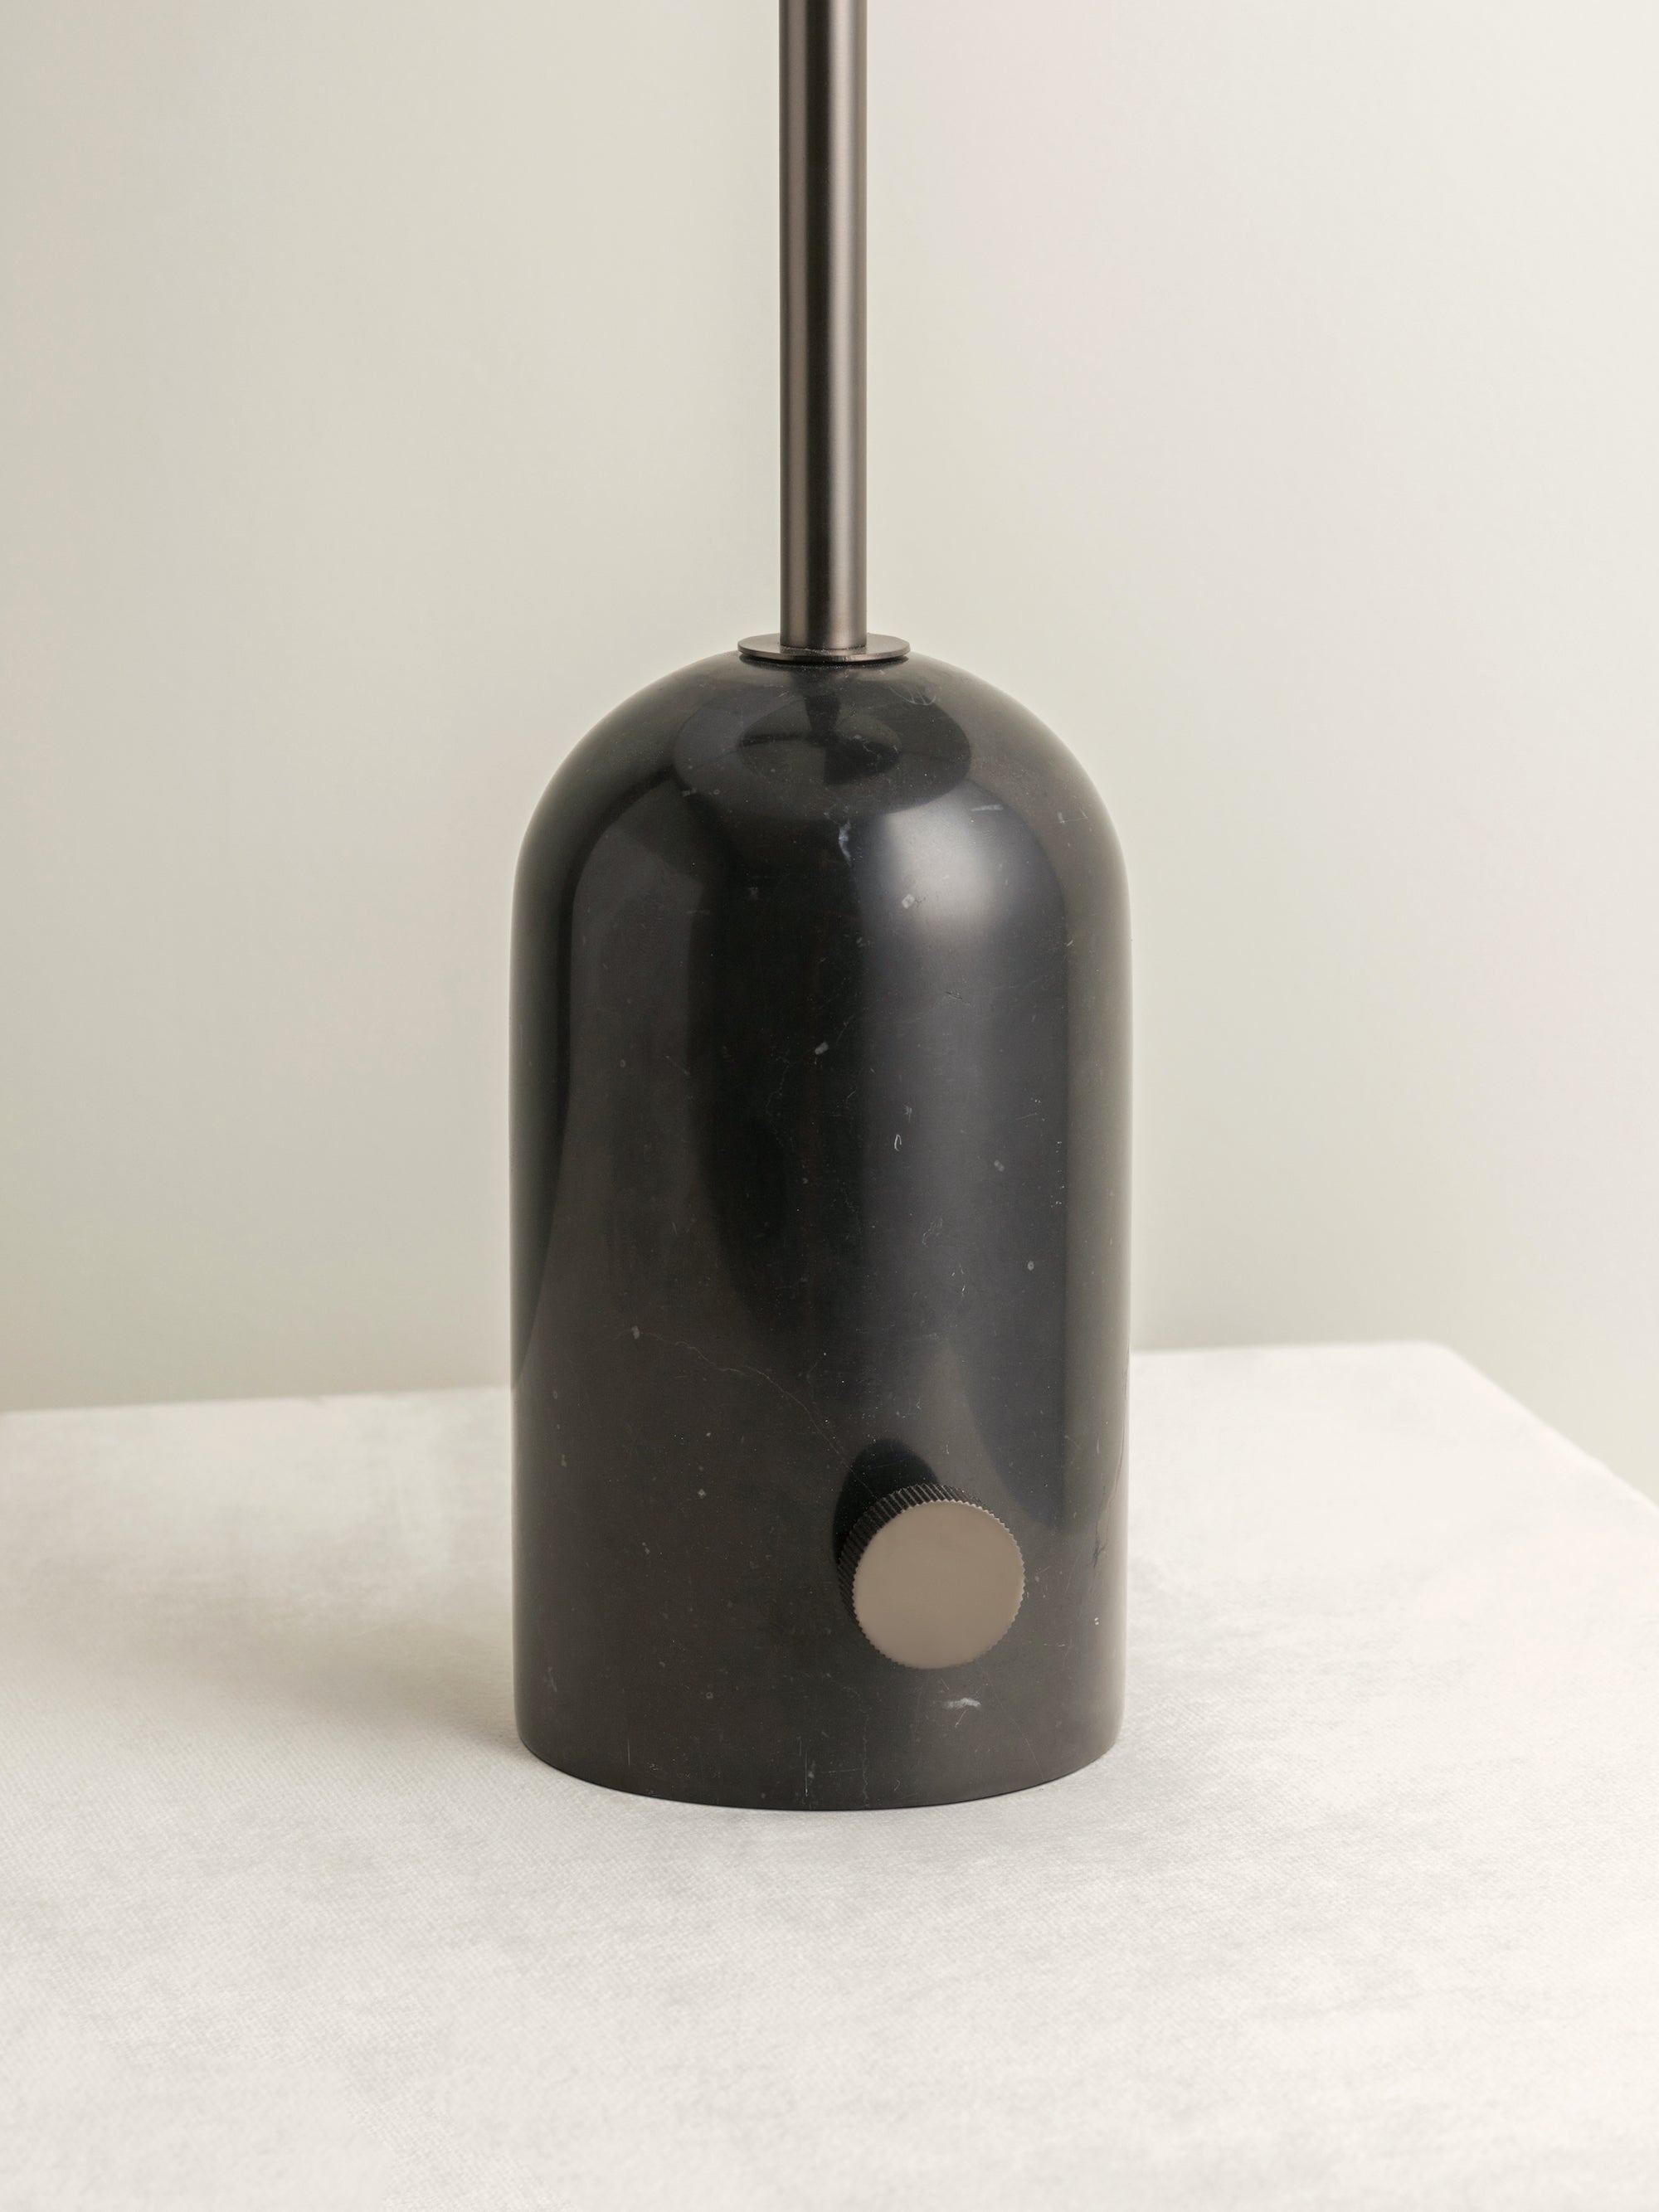 Penn - black marble and graphite silver table lamp | Table Lamp | Lights & Lamps Inc | Modern Affordable Designer Lighting | USA